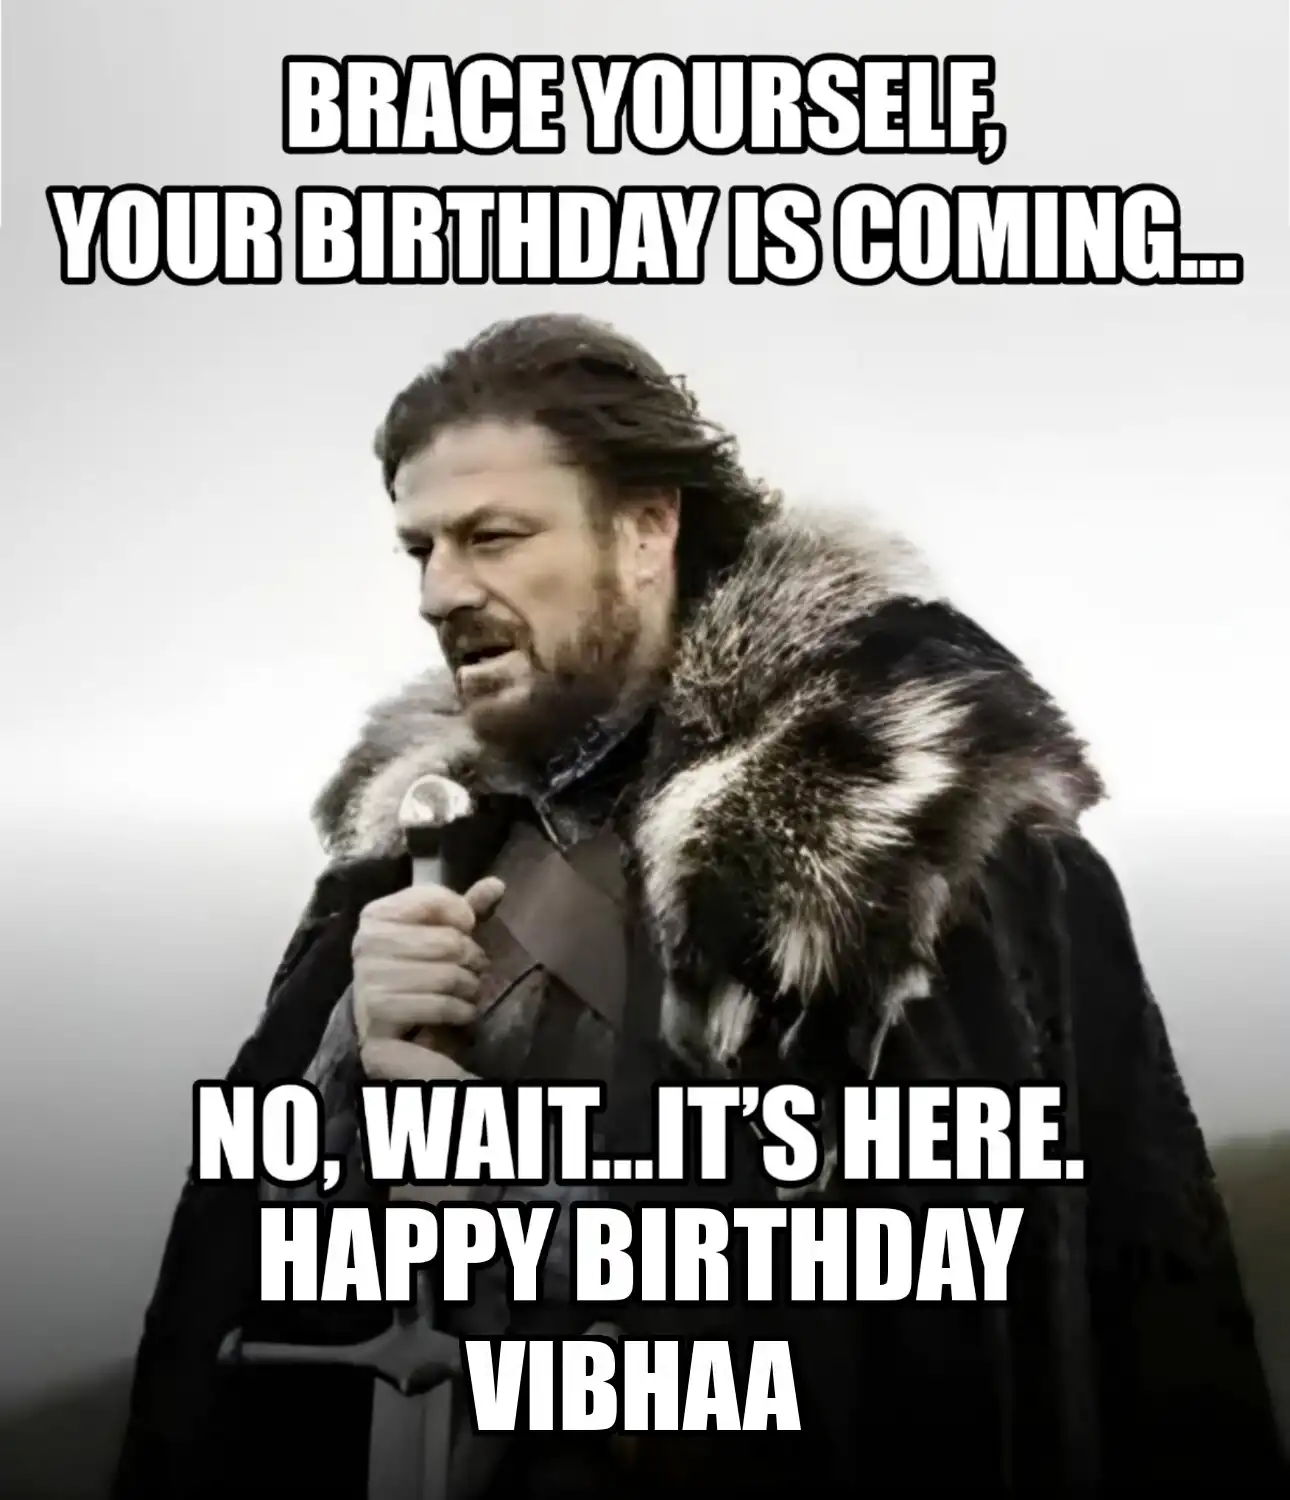 Happy Birthday Vibhaa Brace Yourself Your Birthday Is Coming Meme